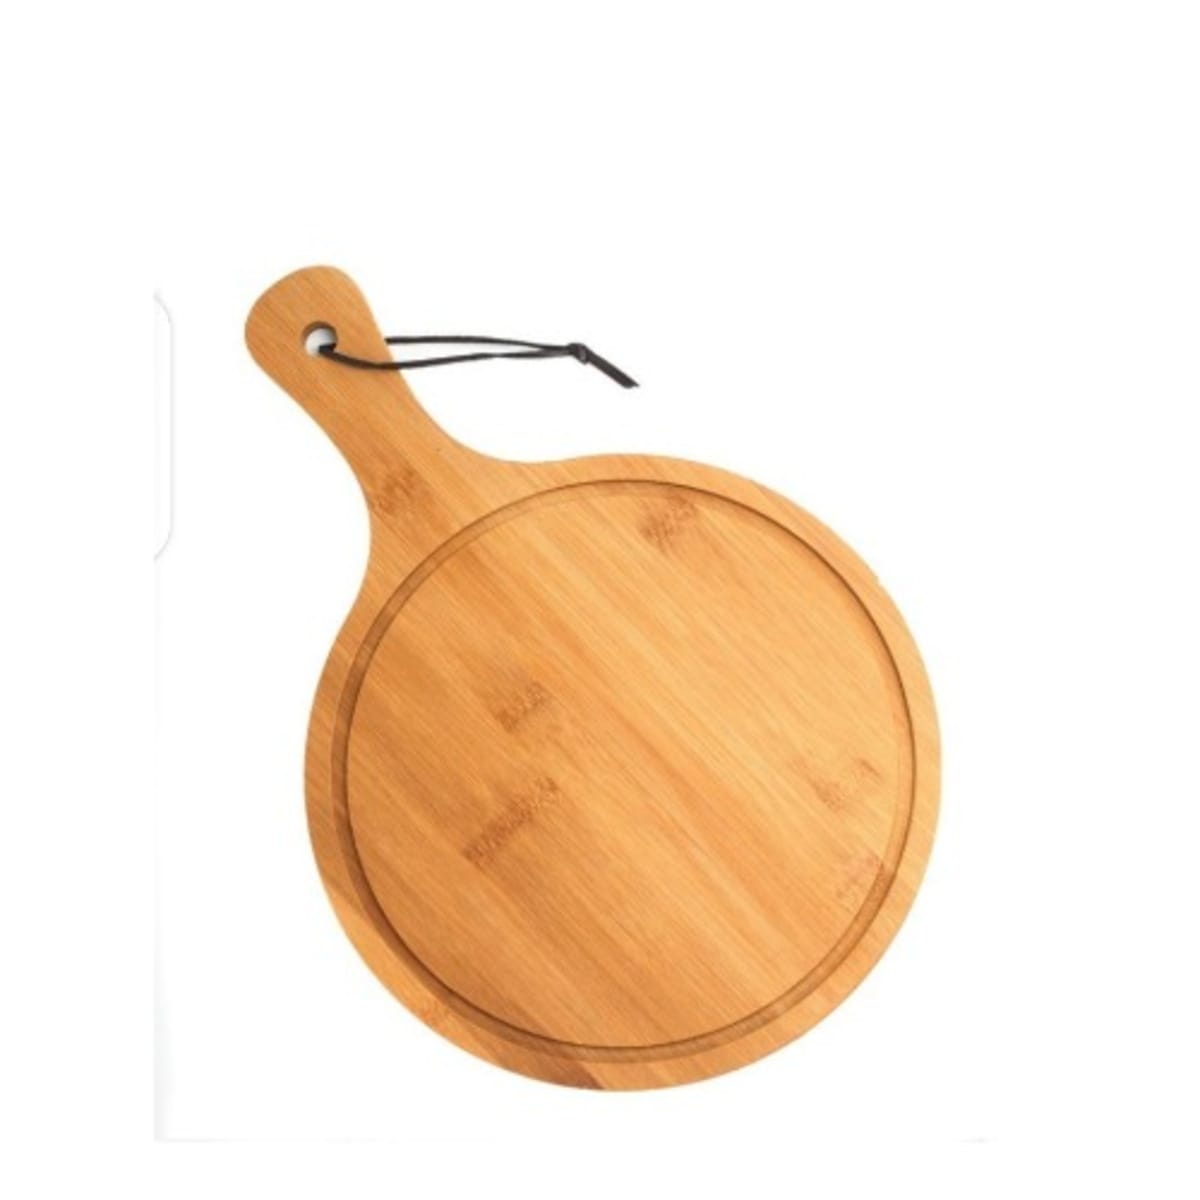 Round Wooden Board - 33cm long 25cm wide